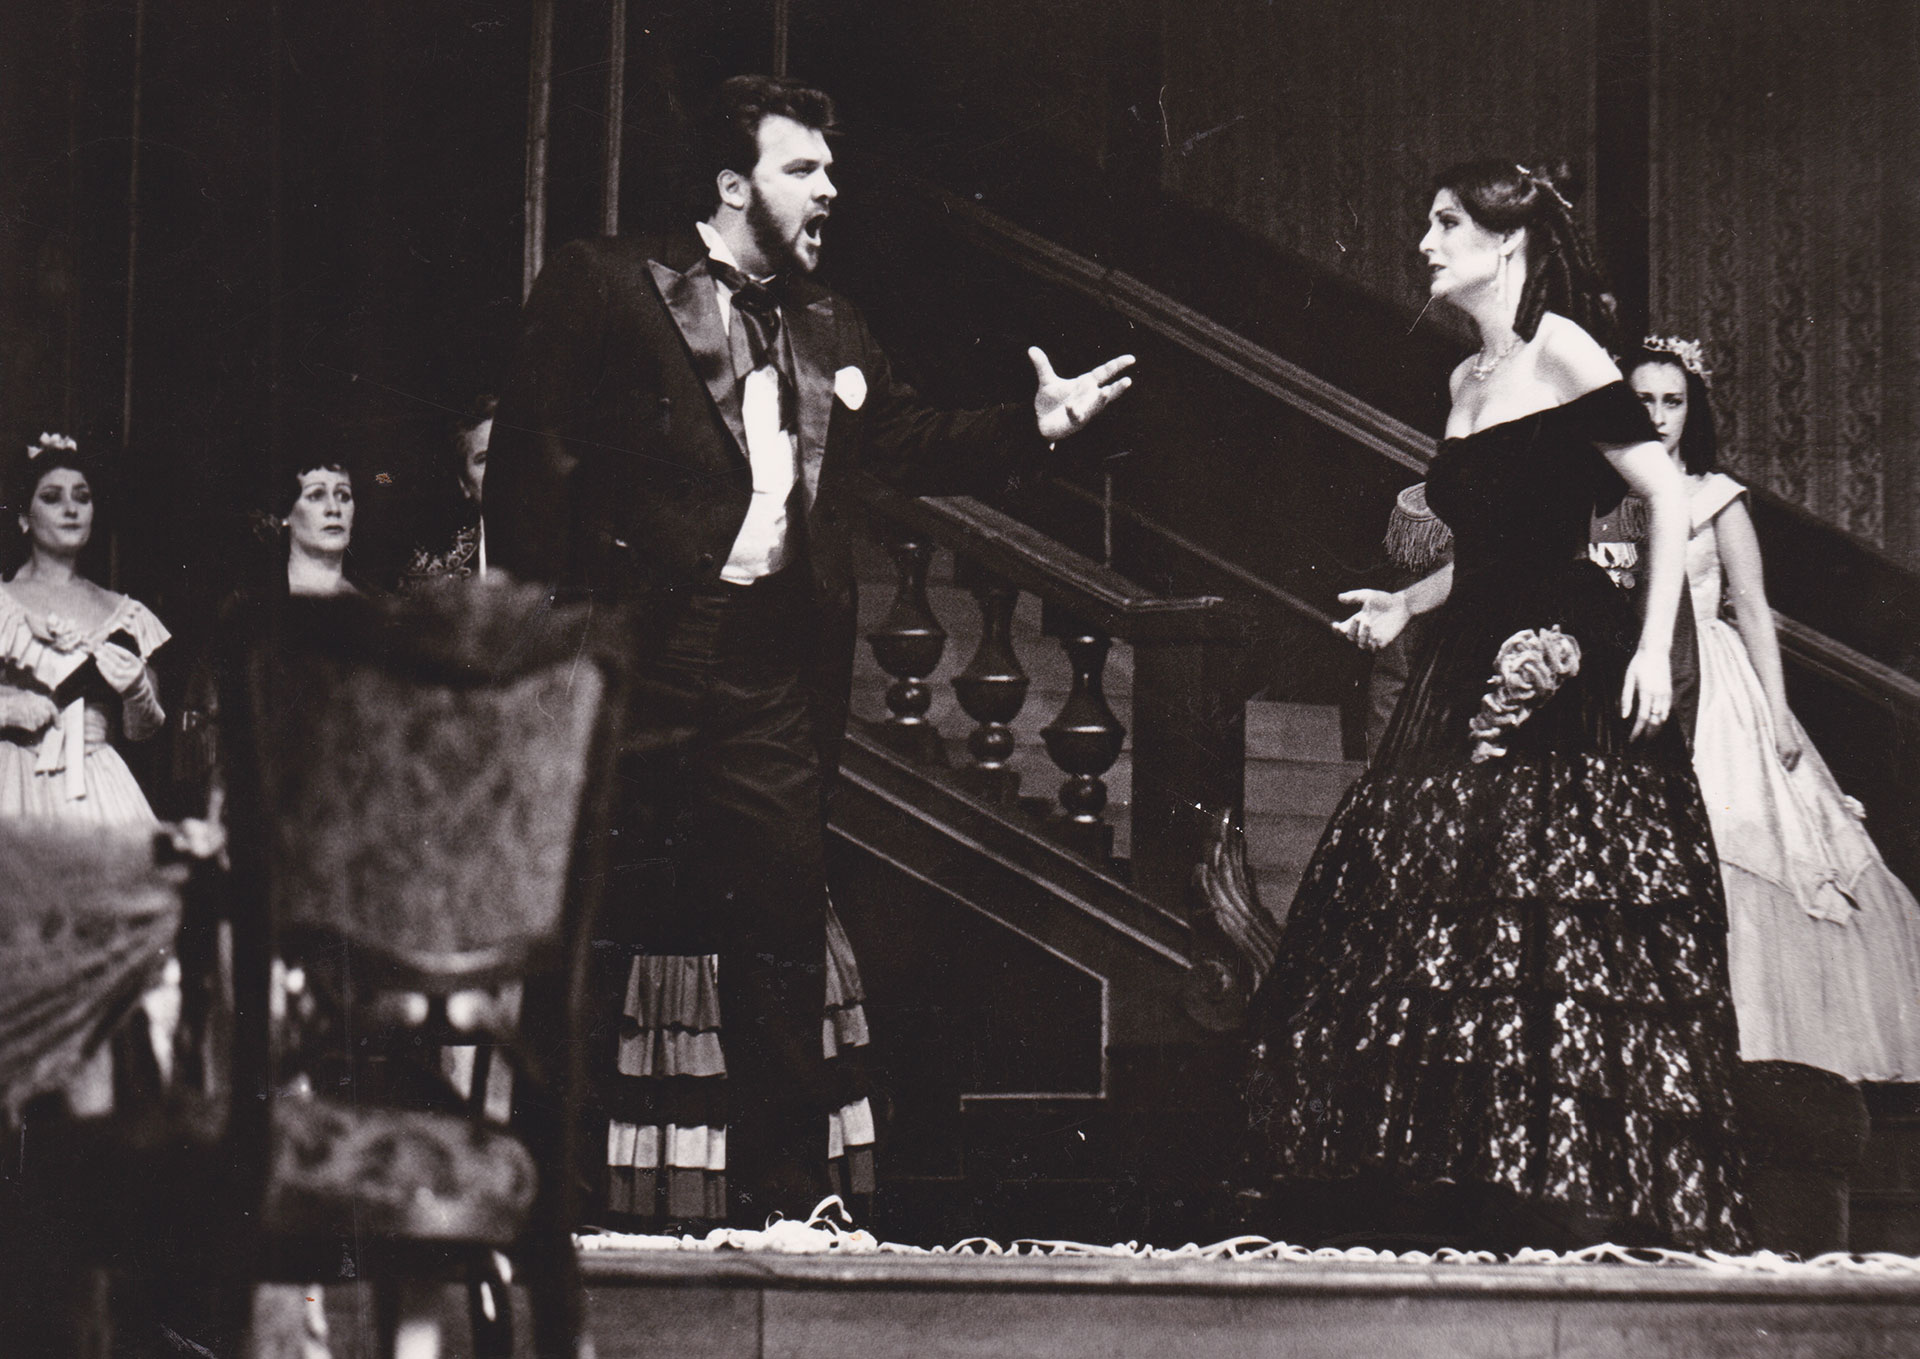 La Traviata with Ivan kyurkchiev